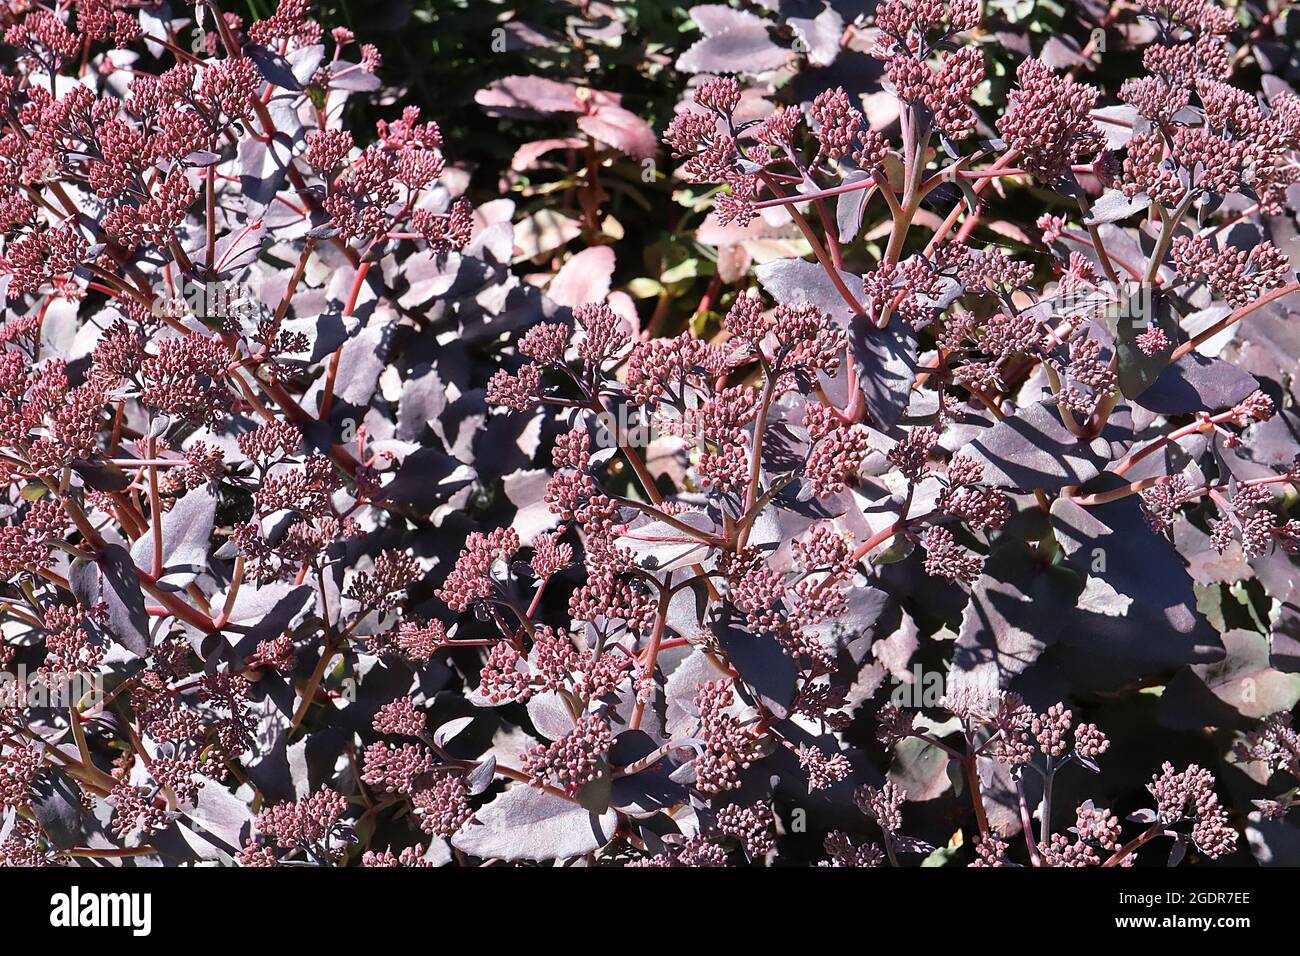 Hylotelephium / Sedum ‘Karfunkelstein’ flat clusters of tiny crimson flower buds atop fleshy purple black leaves,  July, England, UK Stock Photo